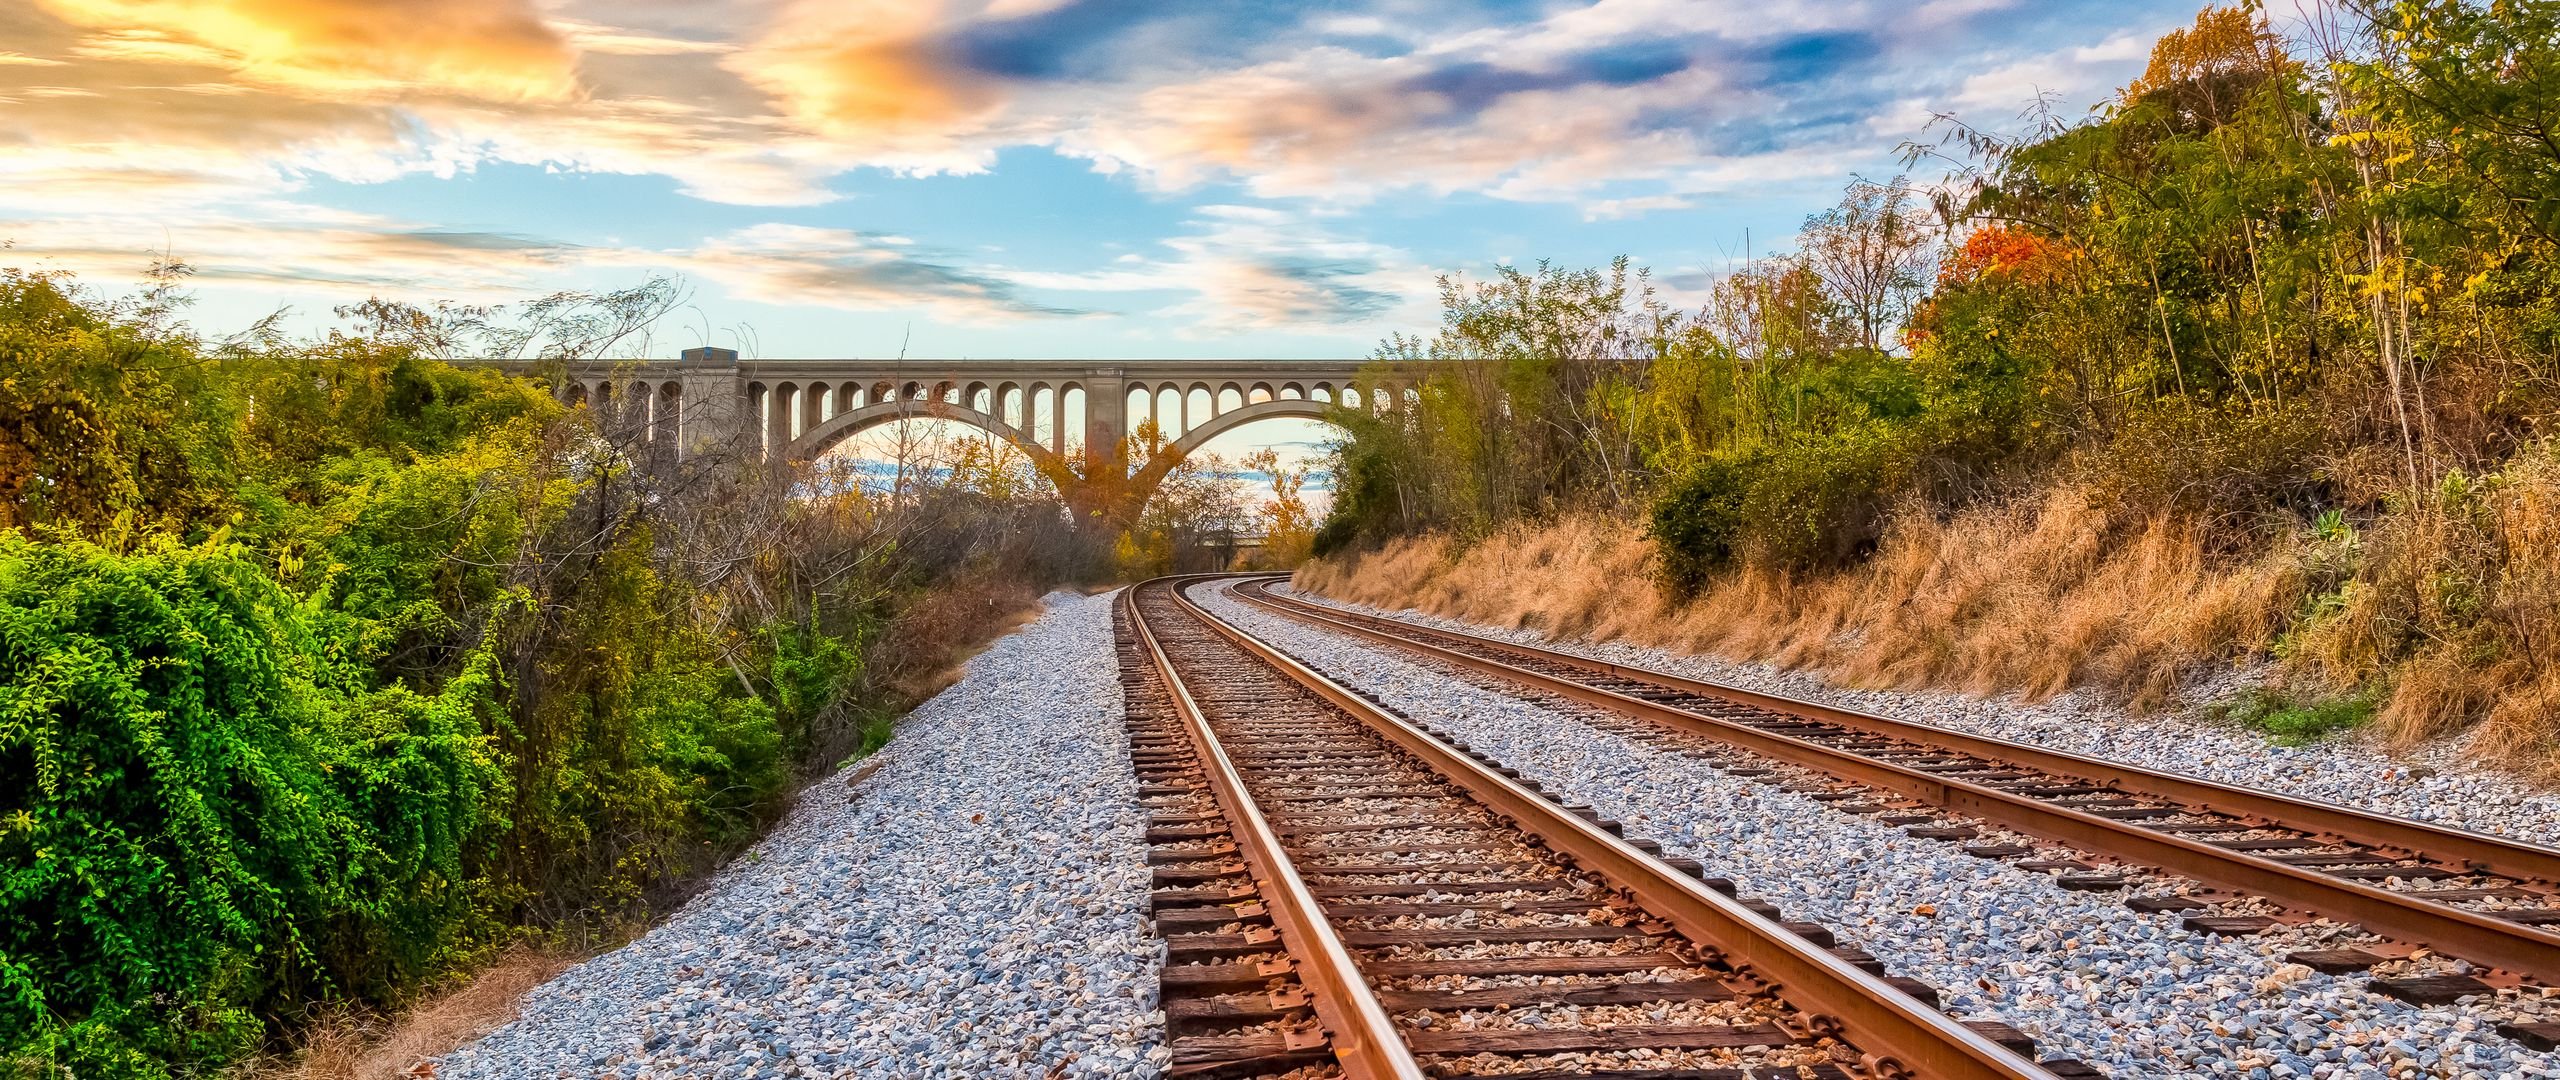 Wallpaper Railway and bridge